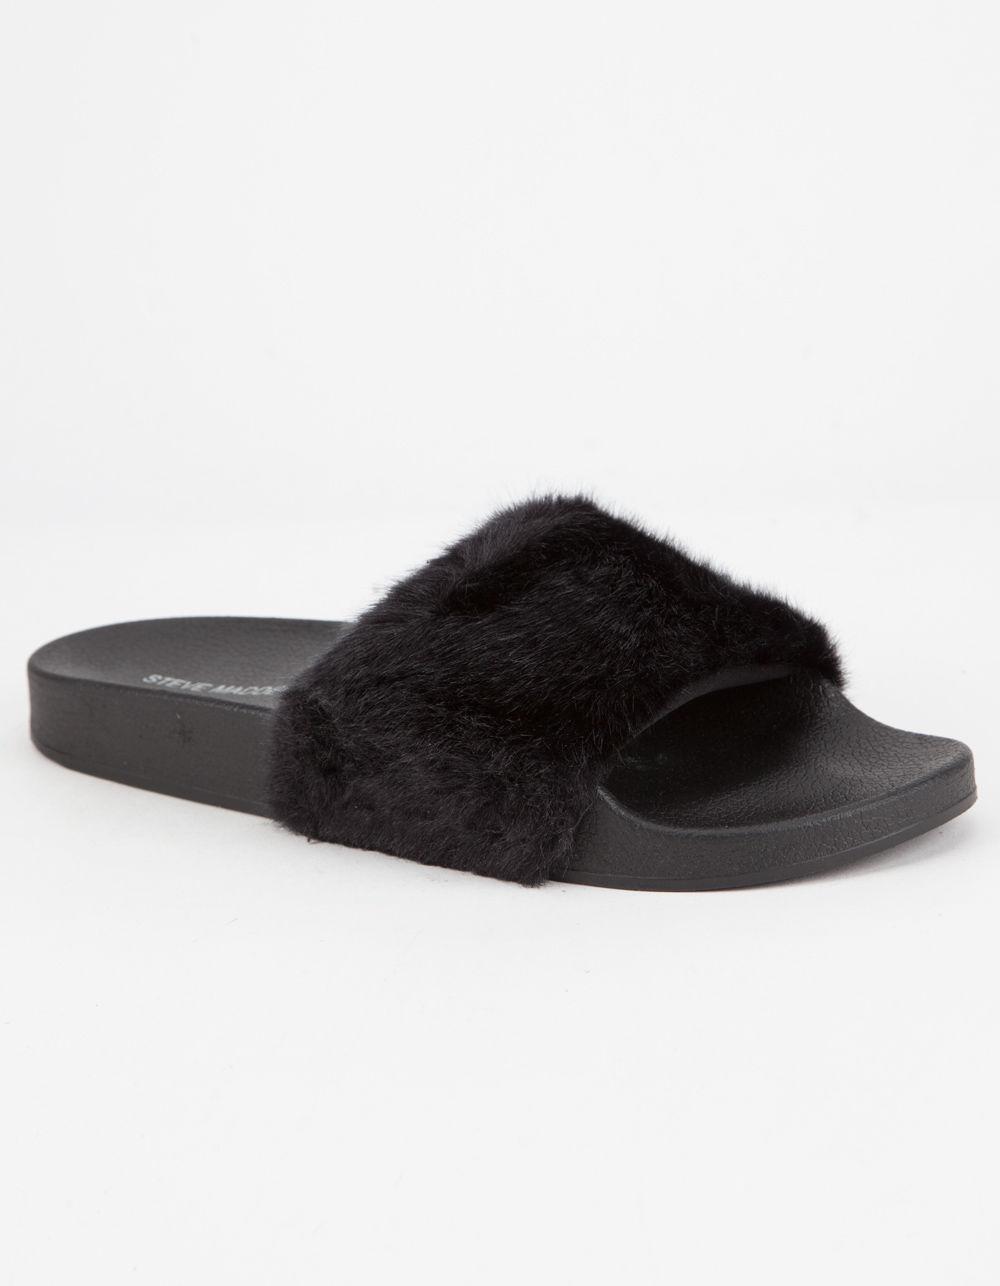 Steve Madden Softey Faux Fur Slide-on Sandals in Black - Lyst